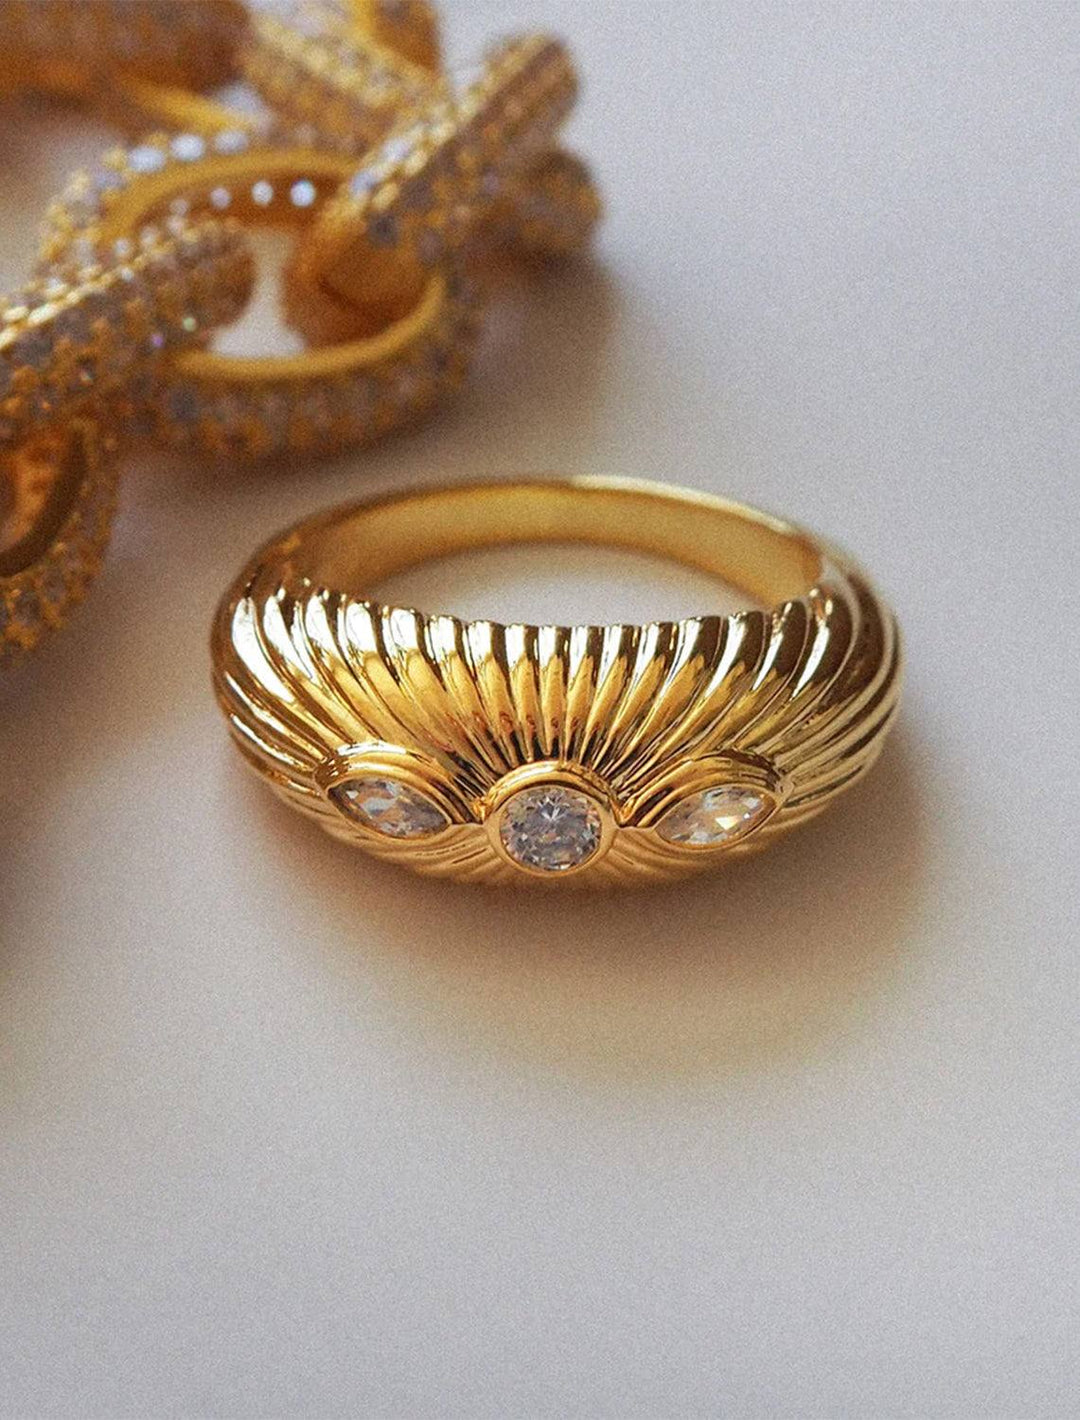 Stylized laydown of Luv AJ's florette ridged signet ring in gold